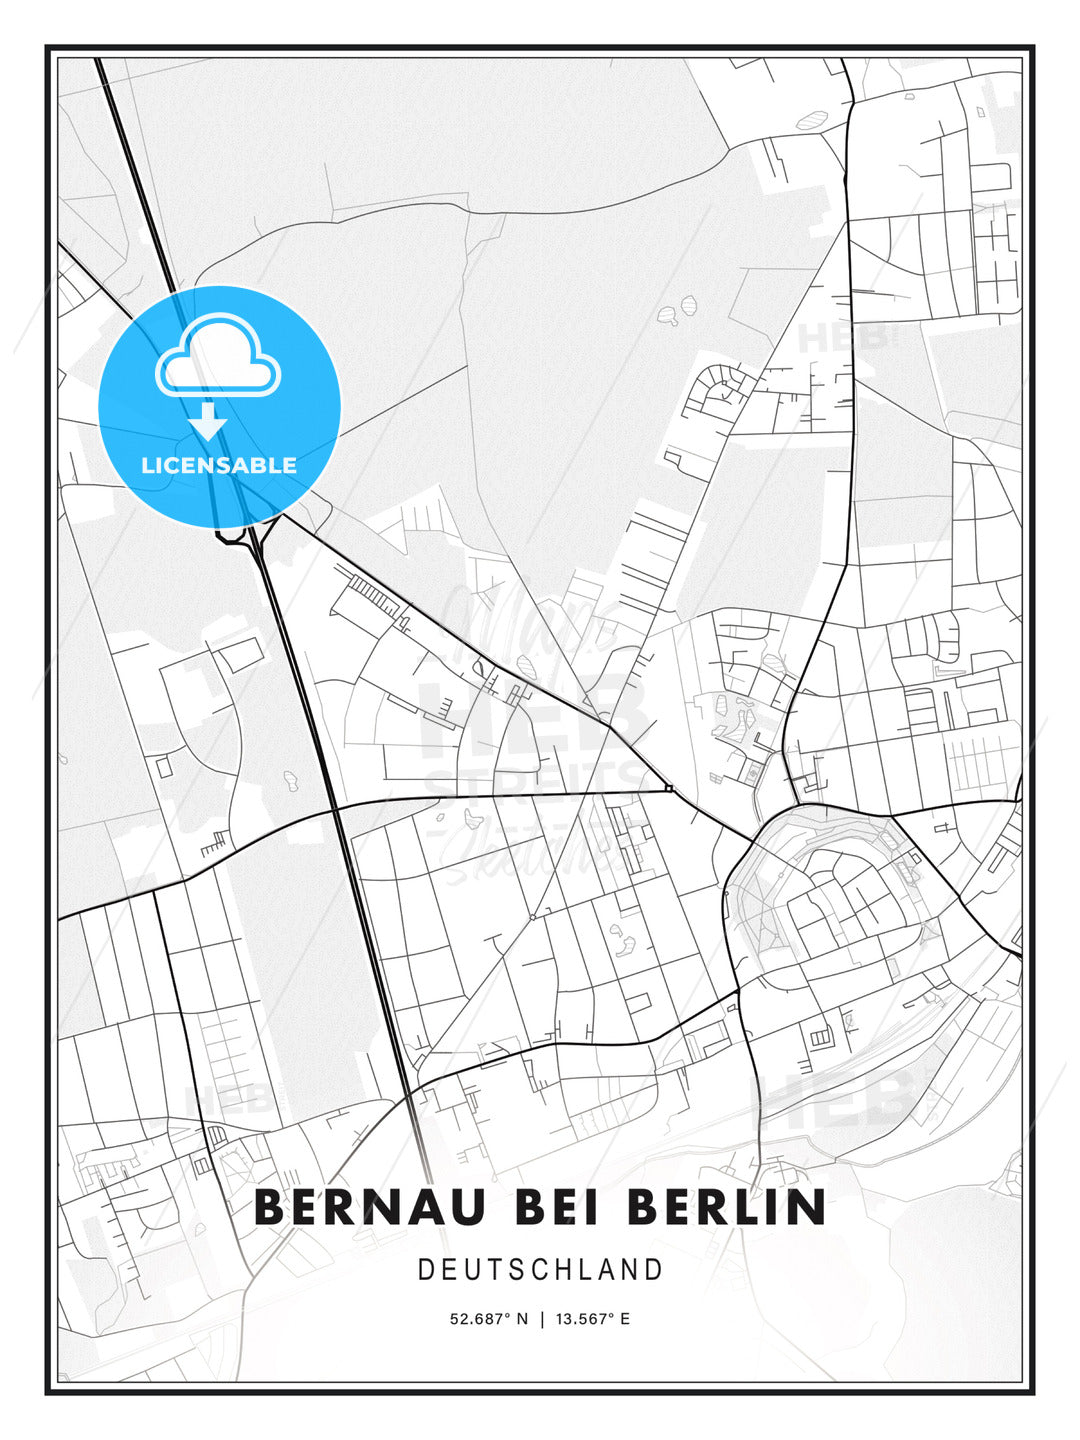 Bernau bei Berlin, Germany, Modern Print Template in Various Formats - HEBSTREITS Sketches